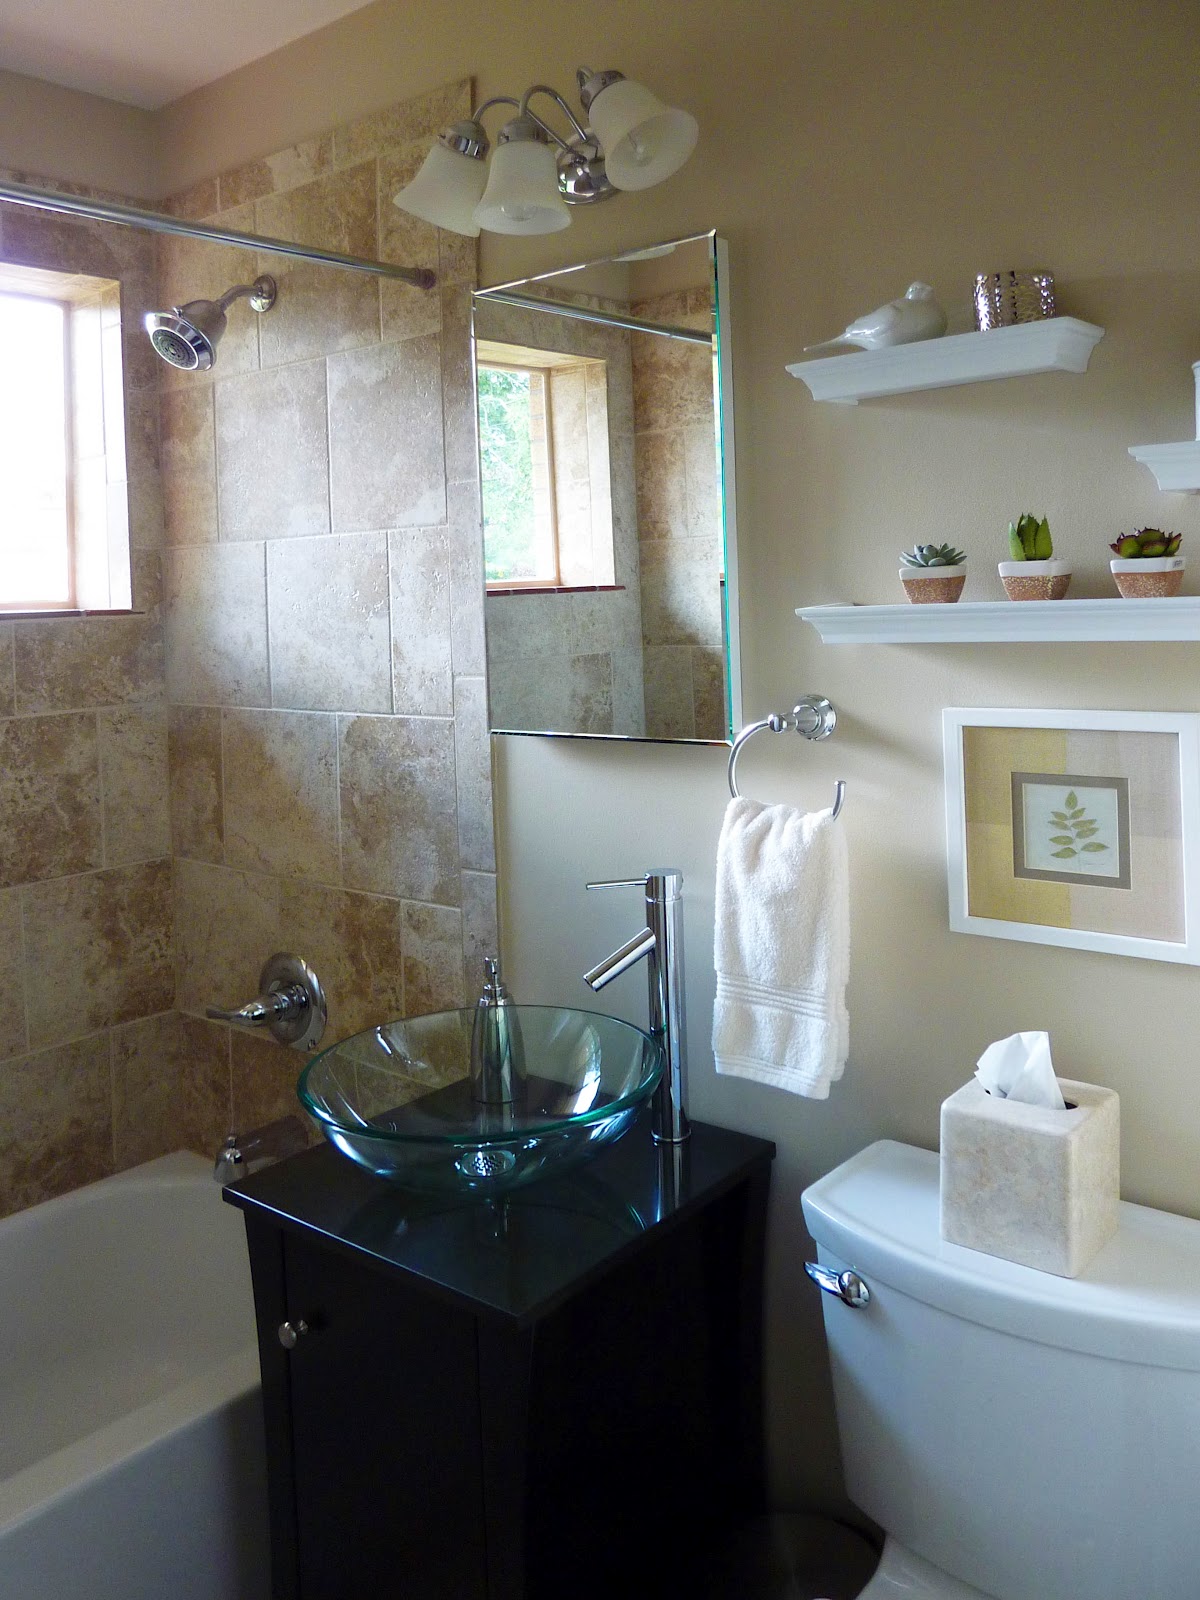 Creating Wonderful Spaces: Dramatic Bath Remodel!